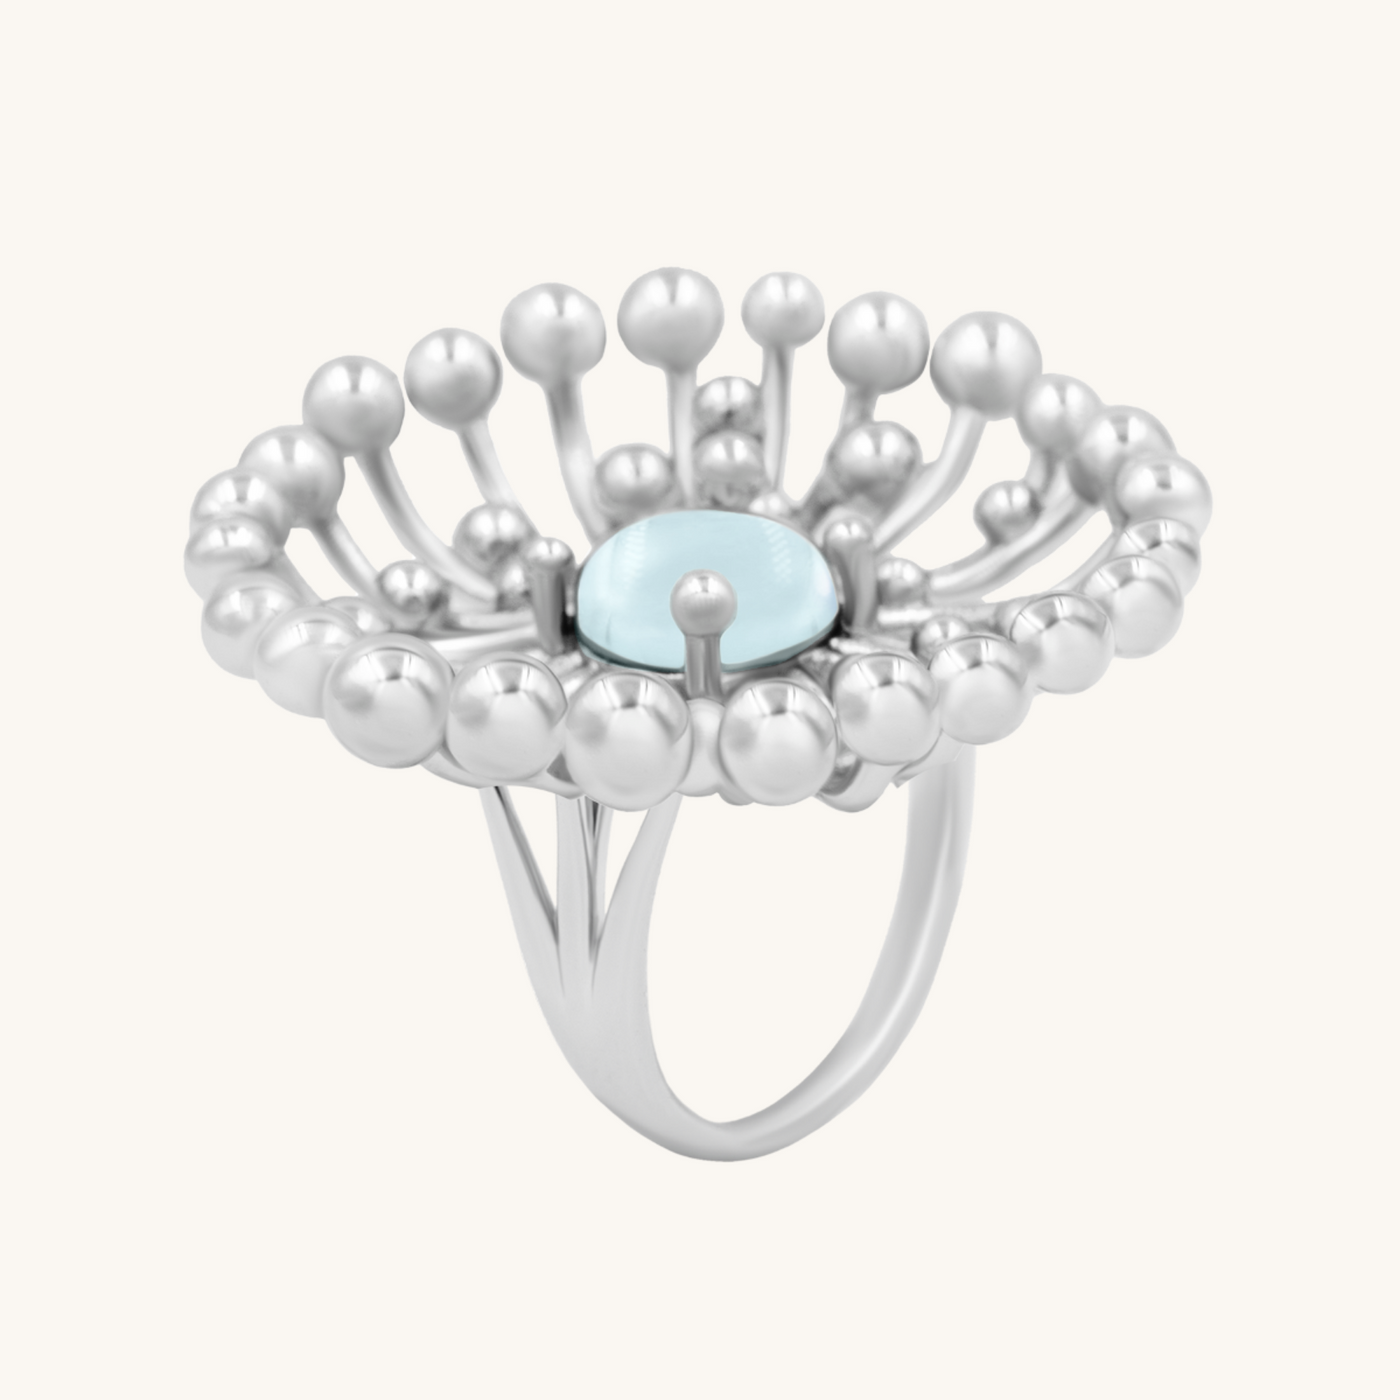 Dandelion Ring with Blue Crystal - Lilou Paris US